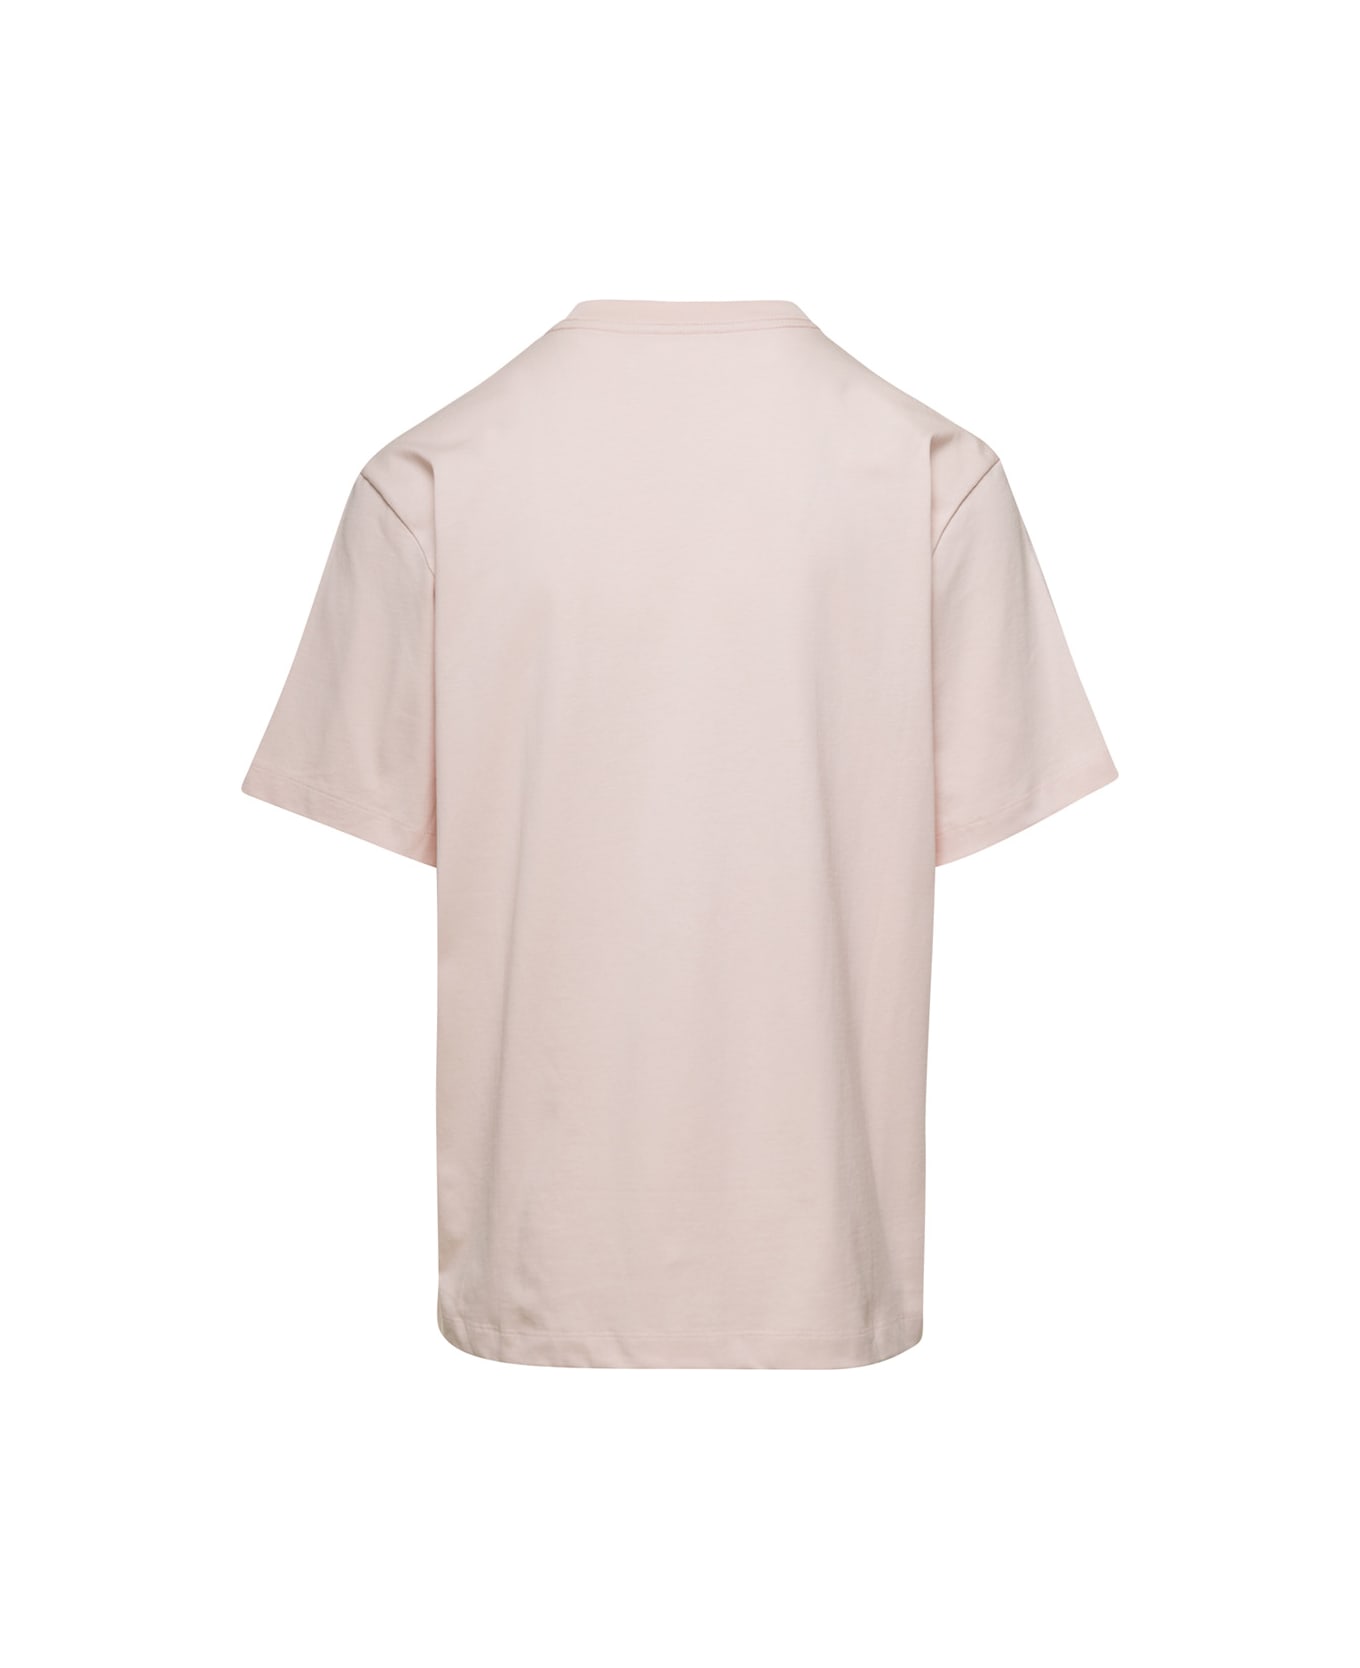 AMIRI Pink Crew Neck T-shirt Iin Cotton Man - Beige